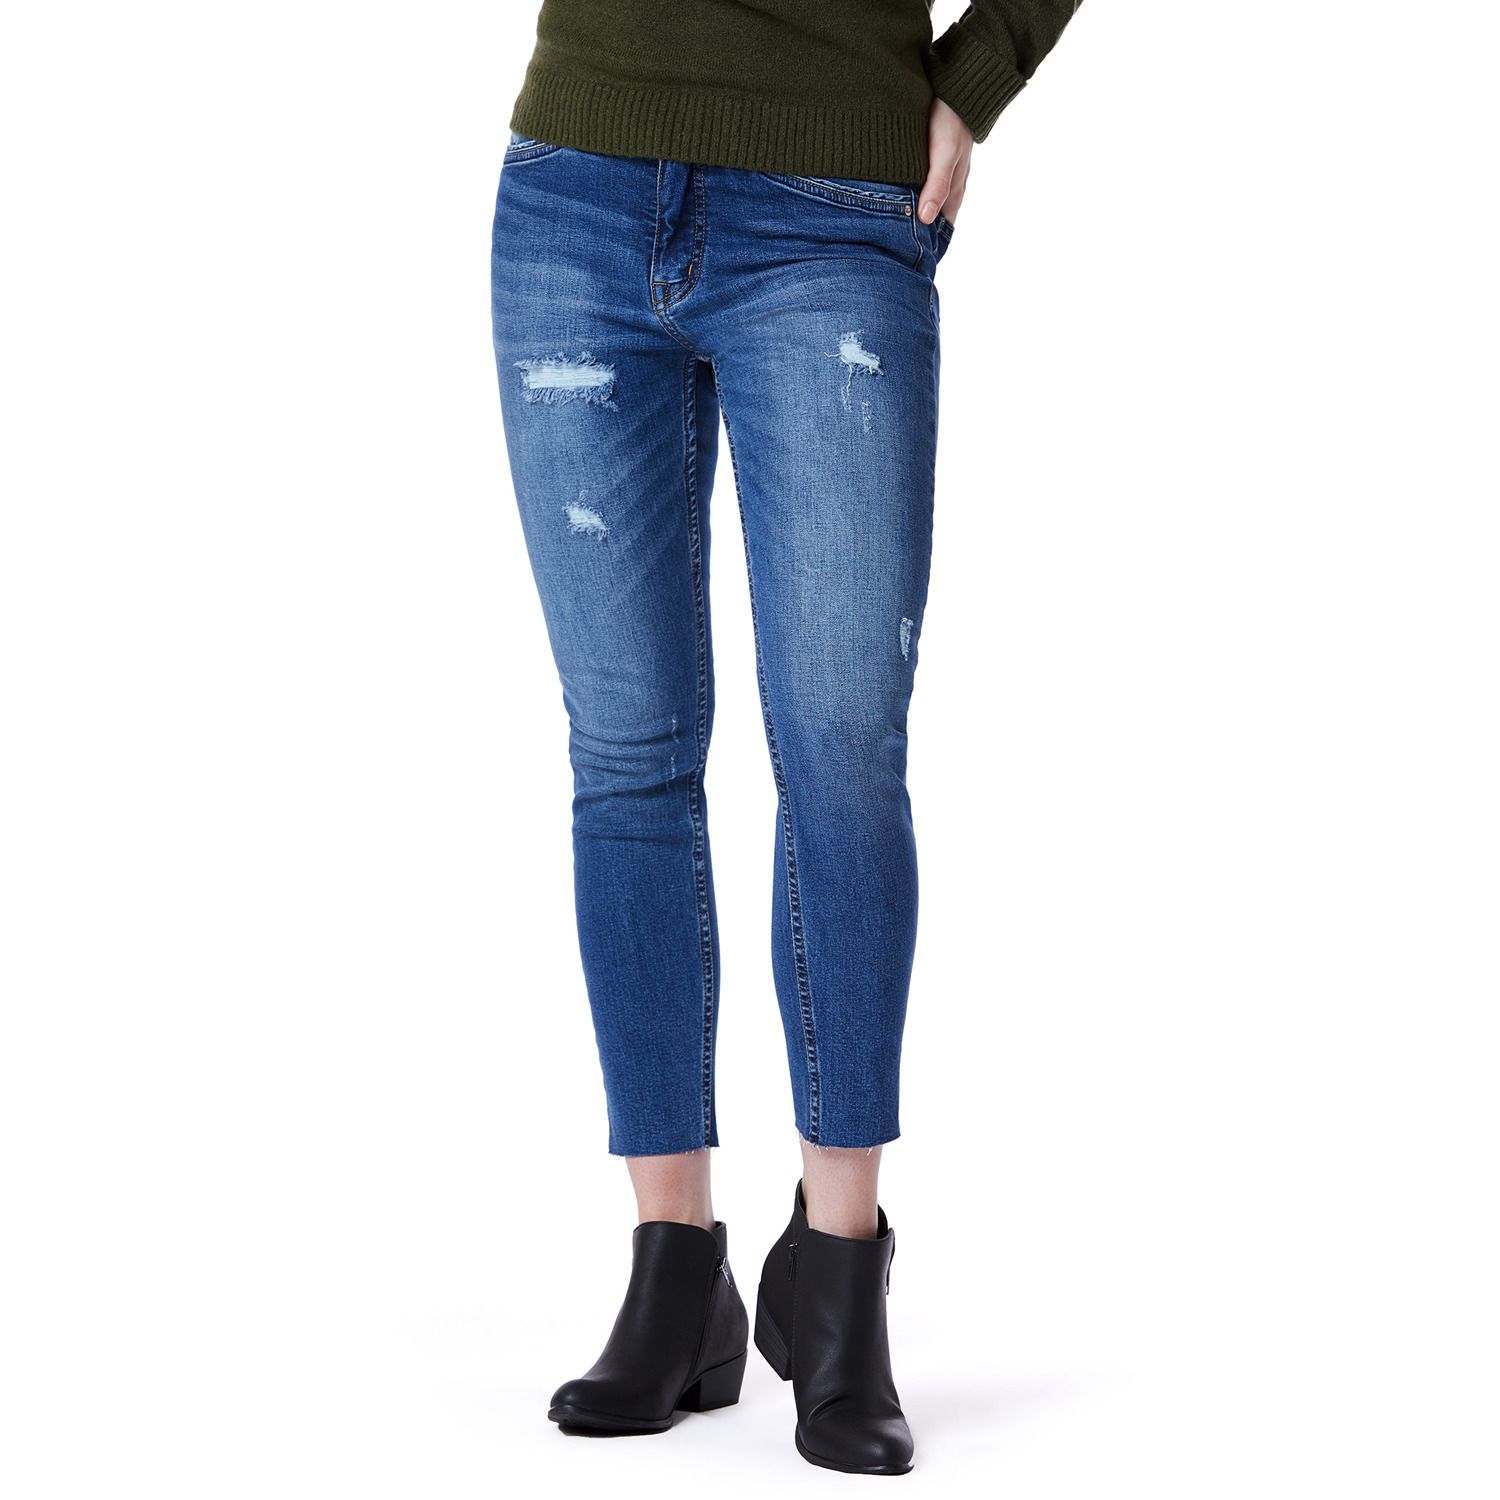 ankle length womens denim jeans